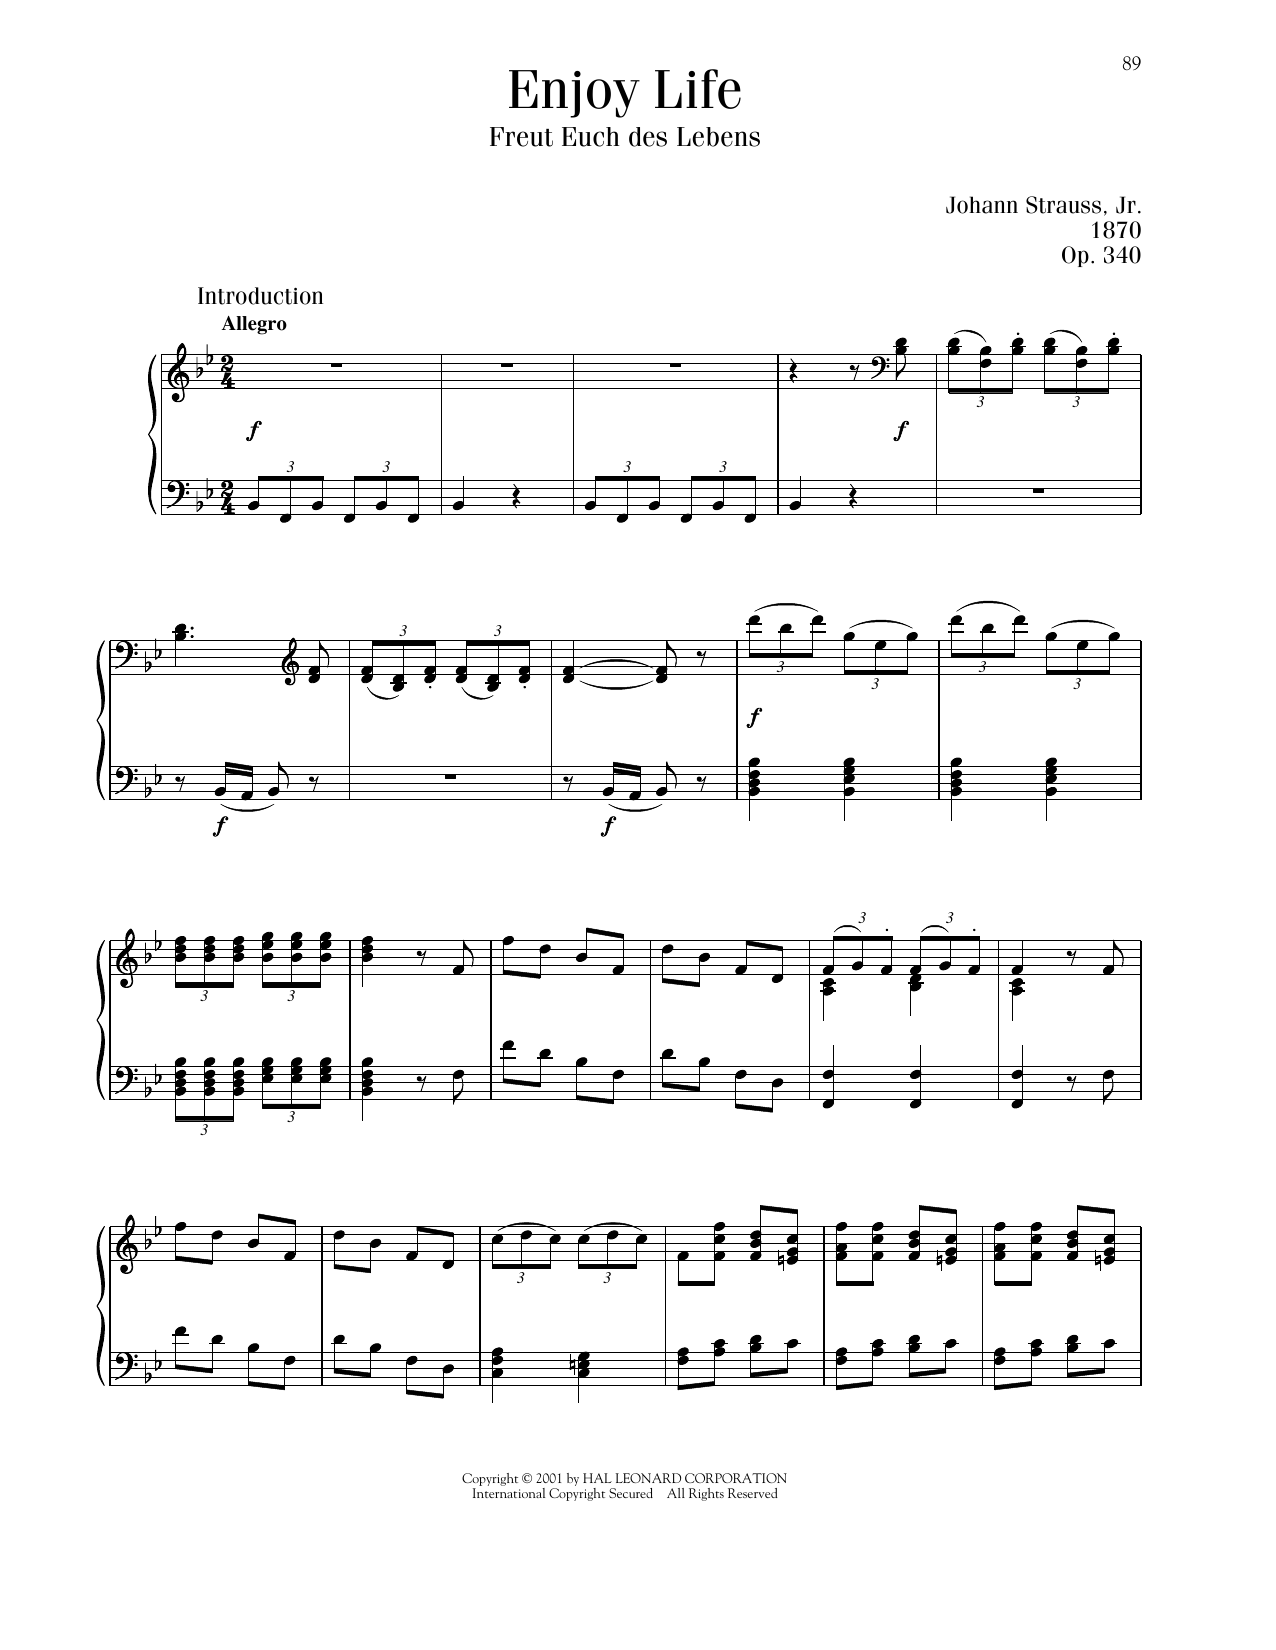 Johann Strauss Enjoy Life, Op. 340 sheet music notes printable PDF score